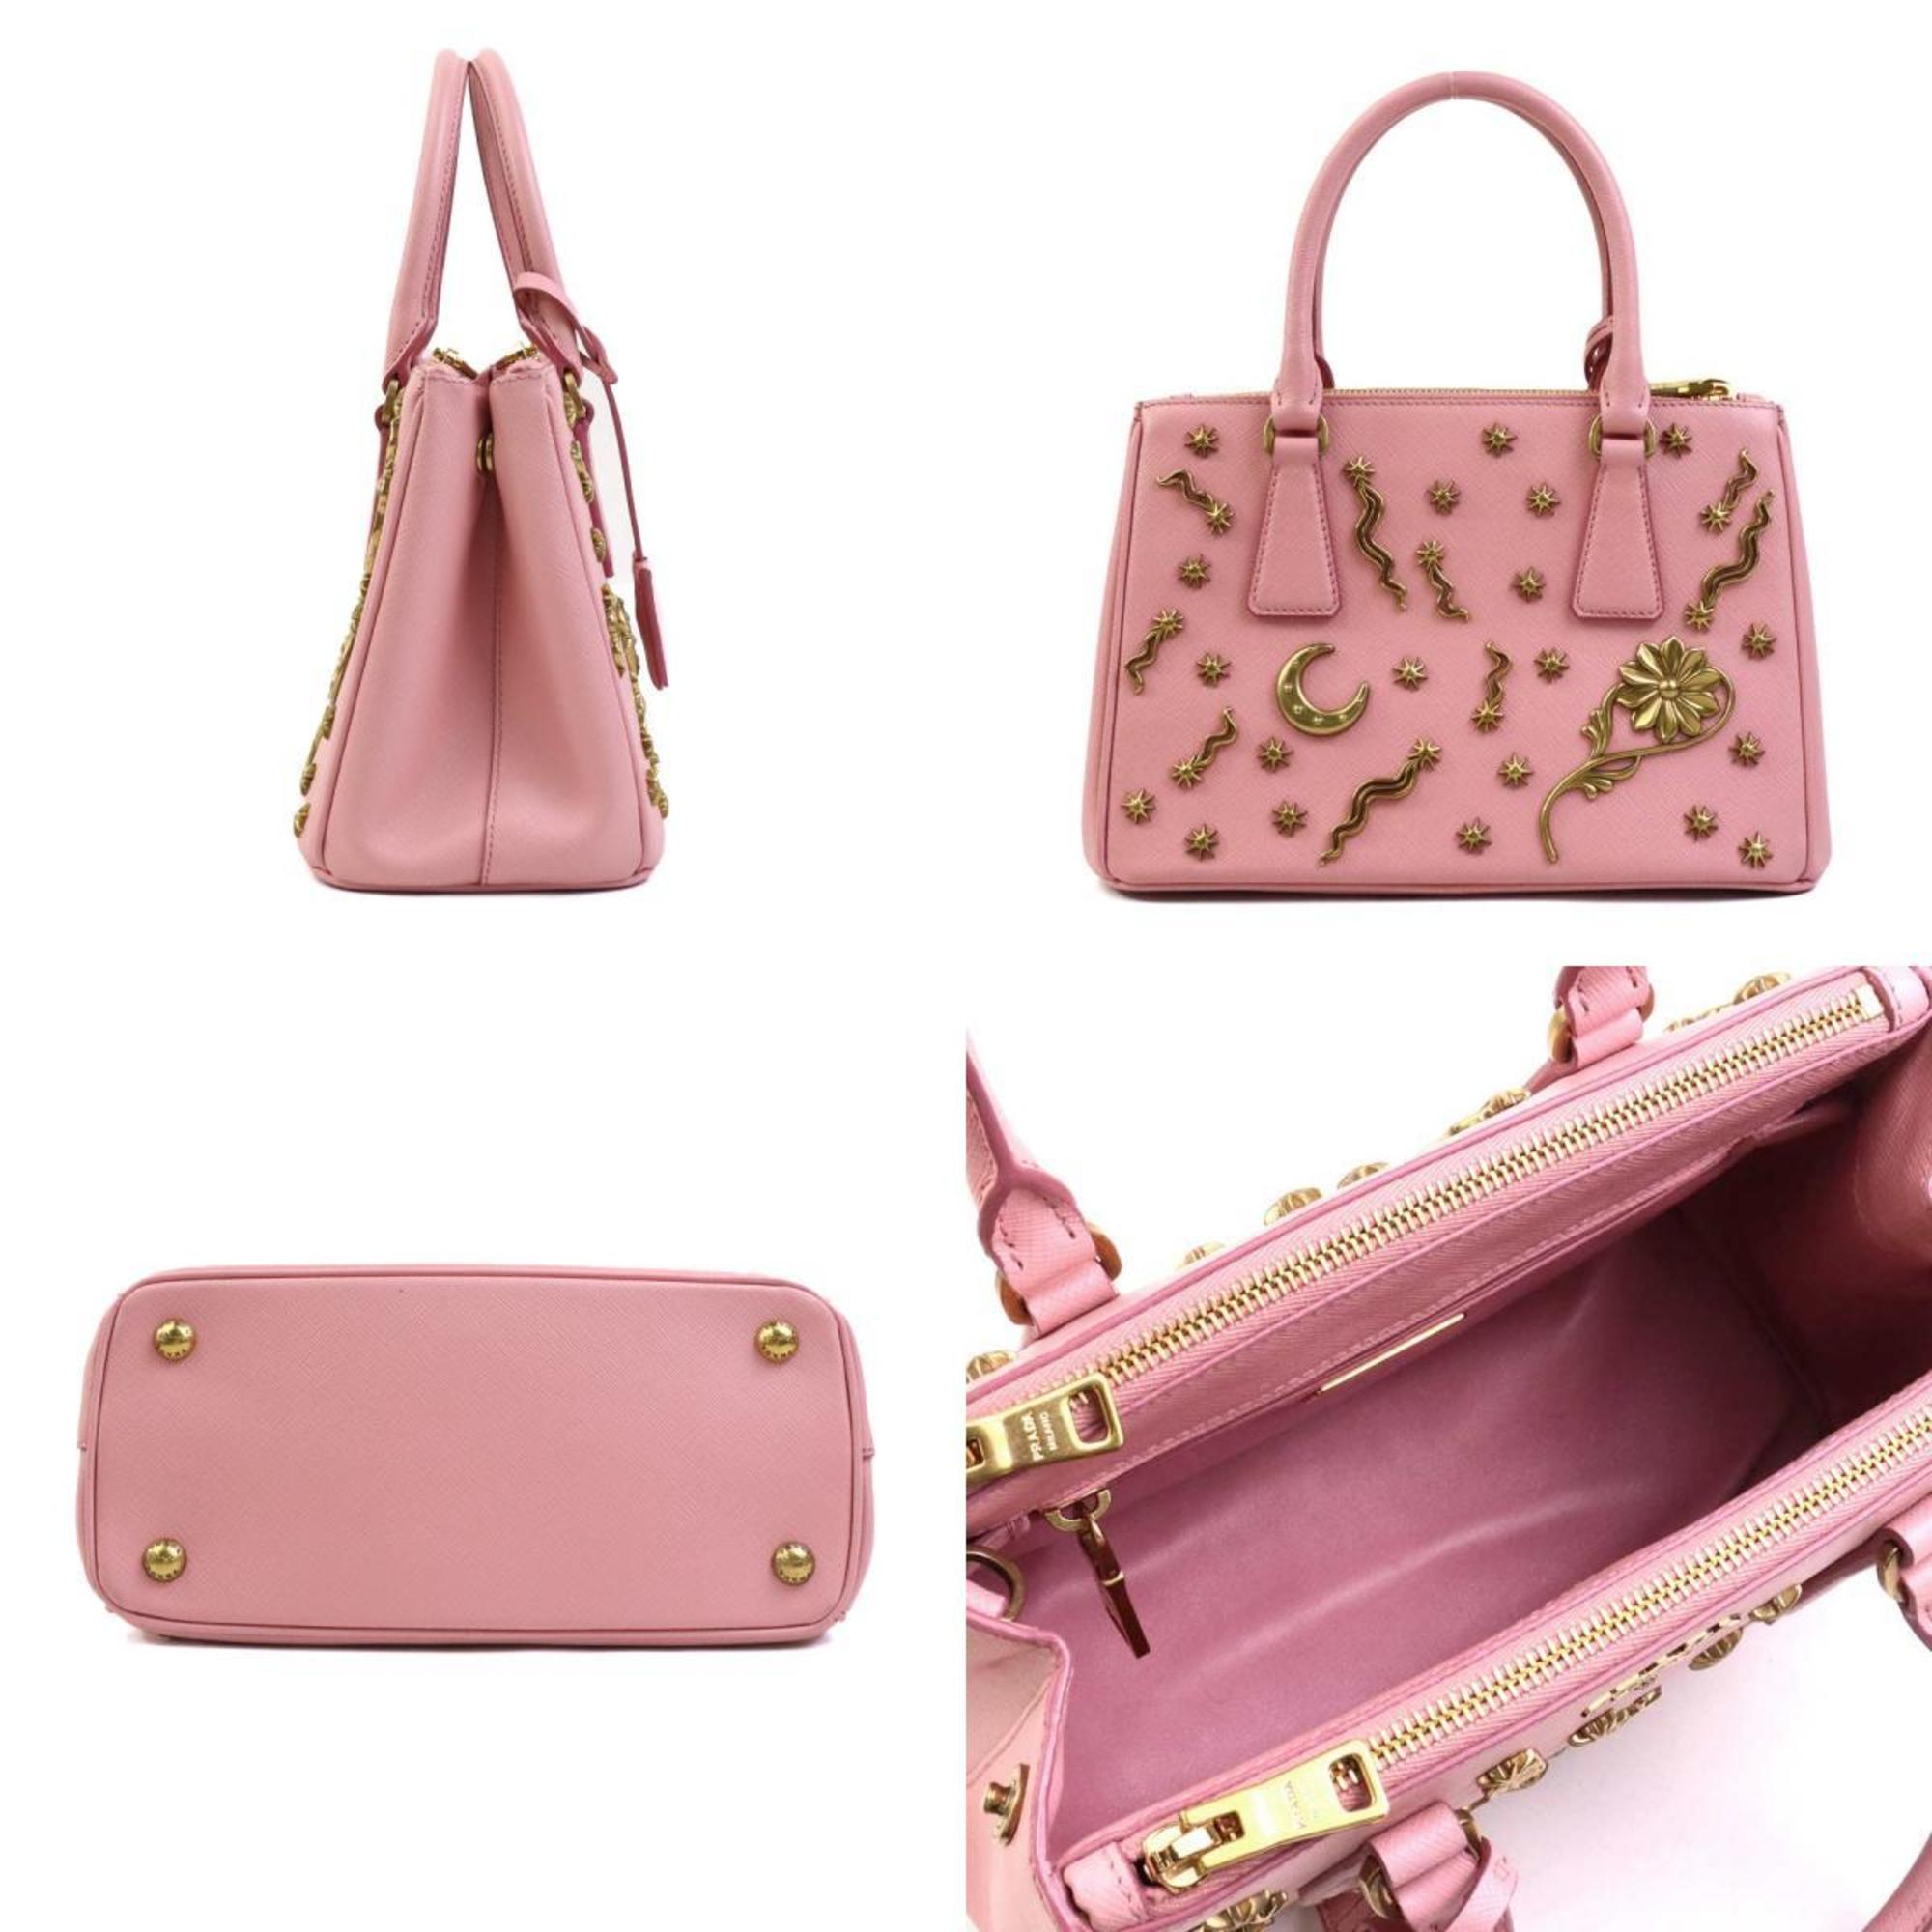 PRADA handbag shoulder bag leather metal pink gold ladies e58761a